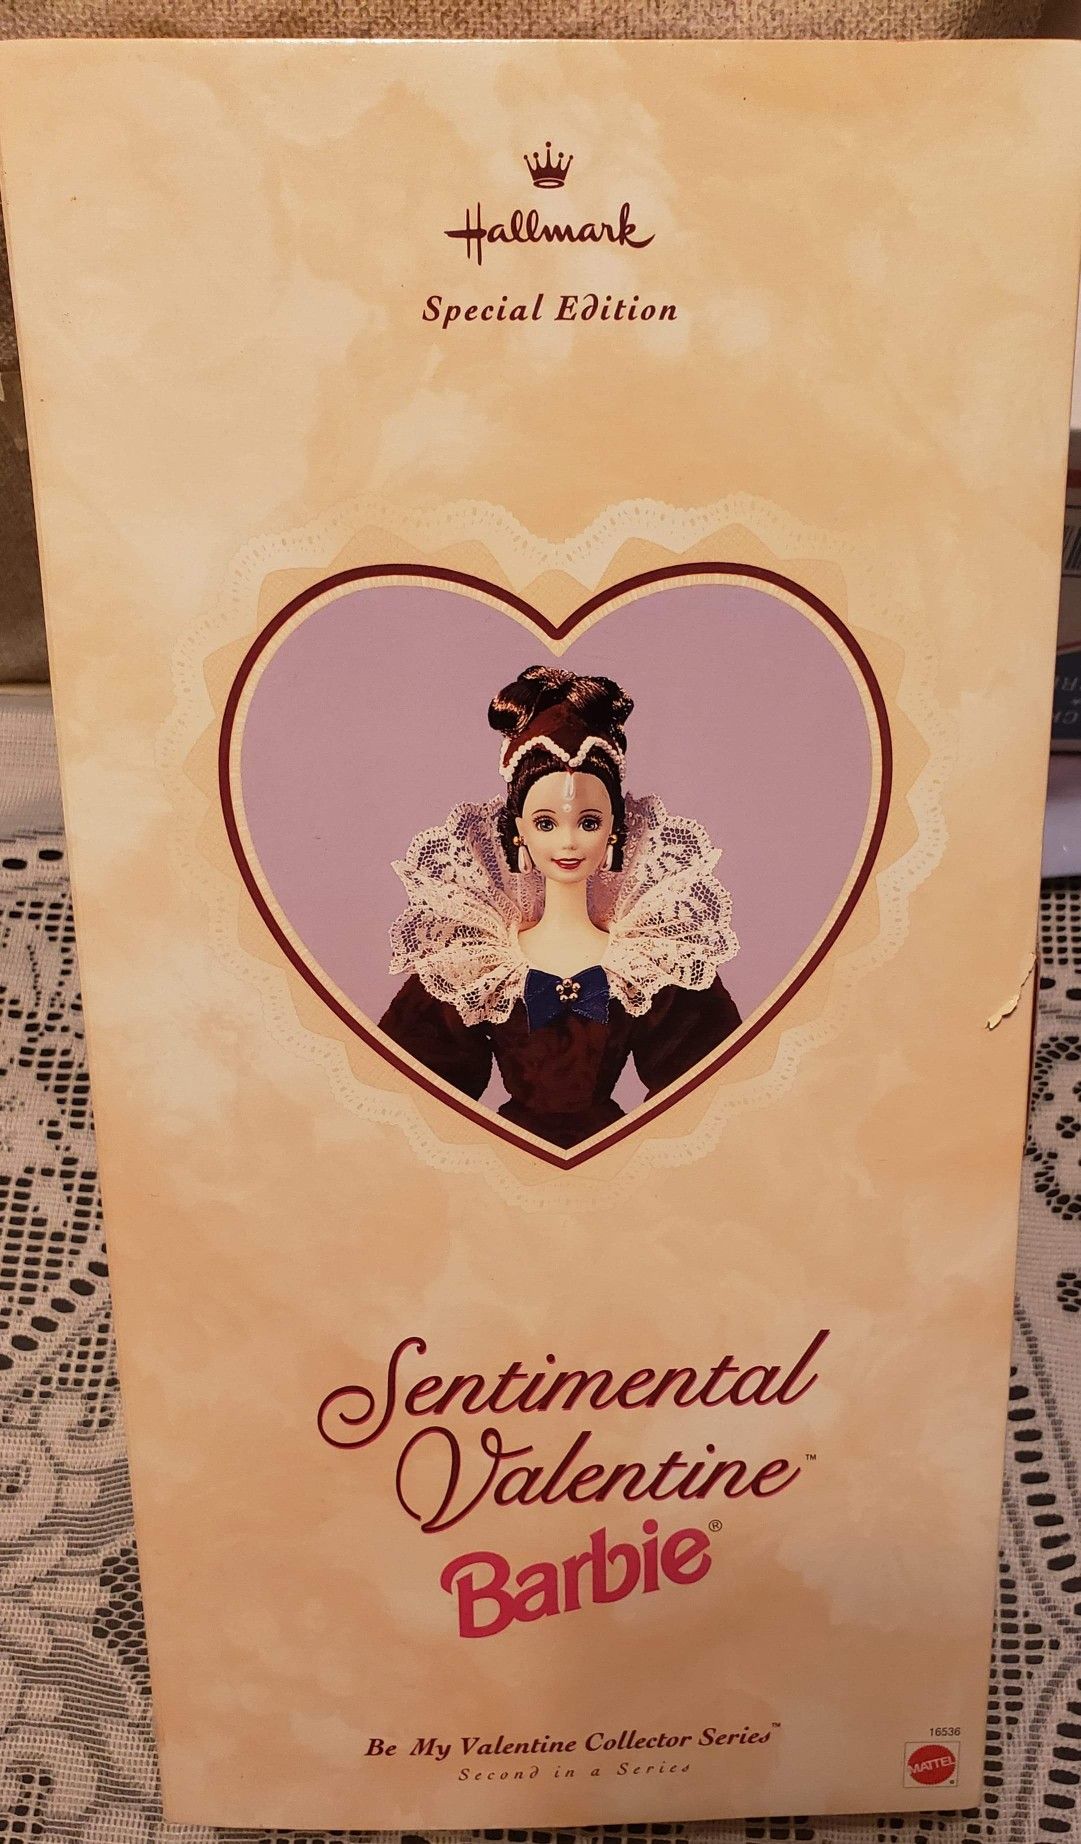 Sentimental Valentine Barbie